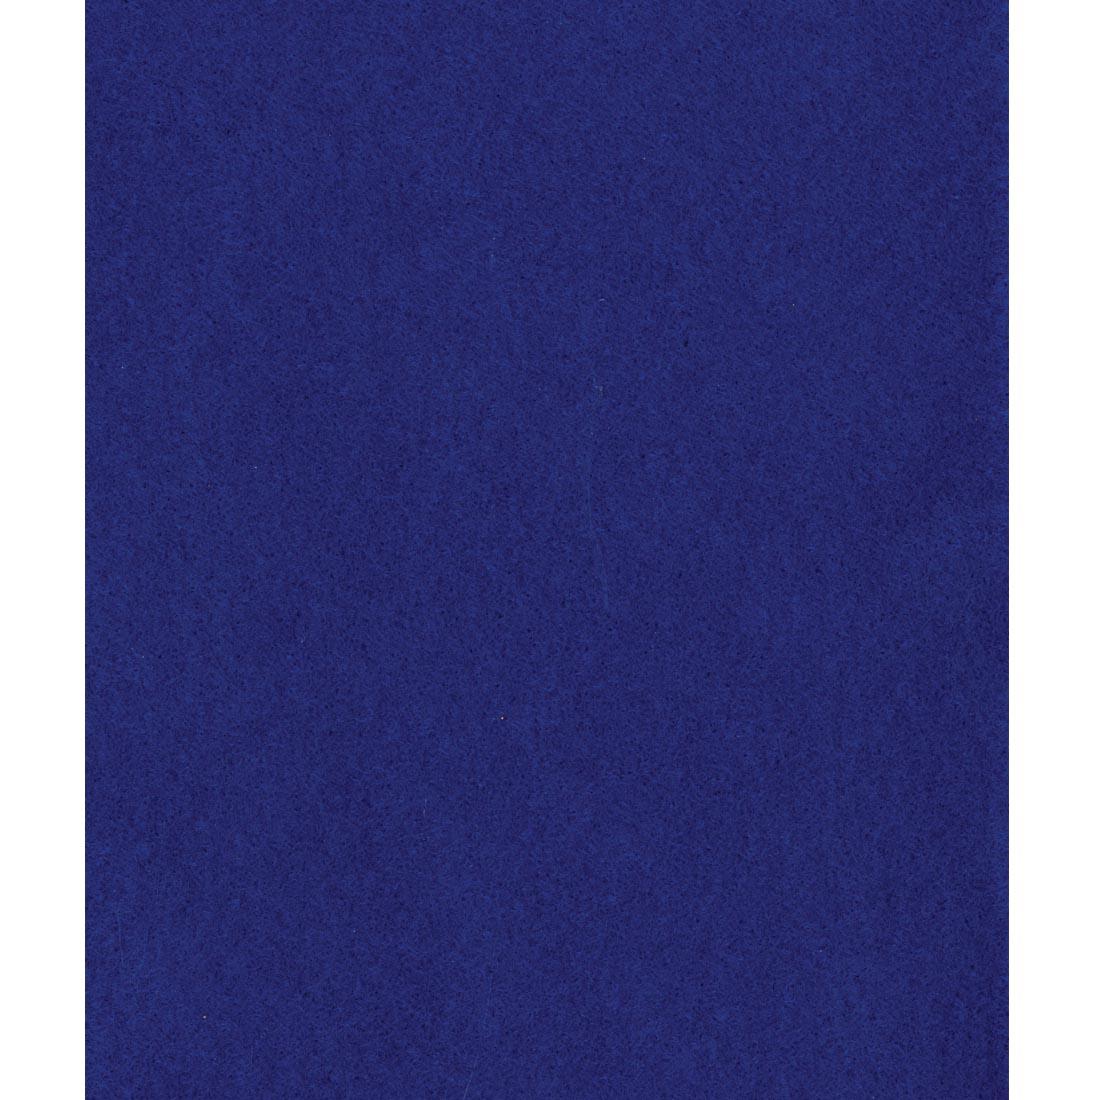 royal blue craft felt sheet